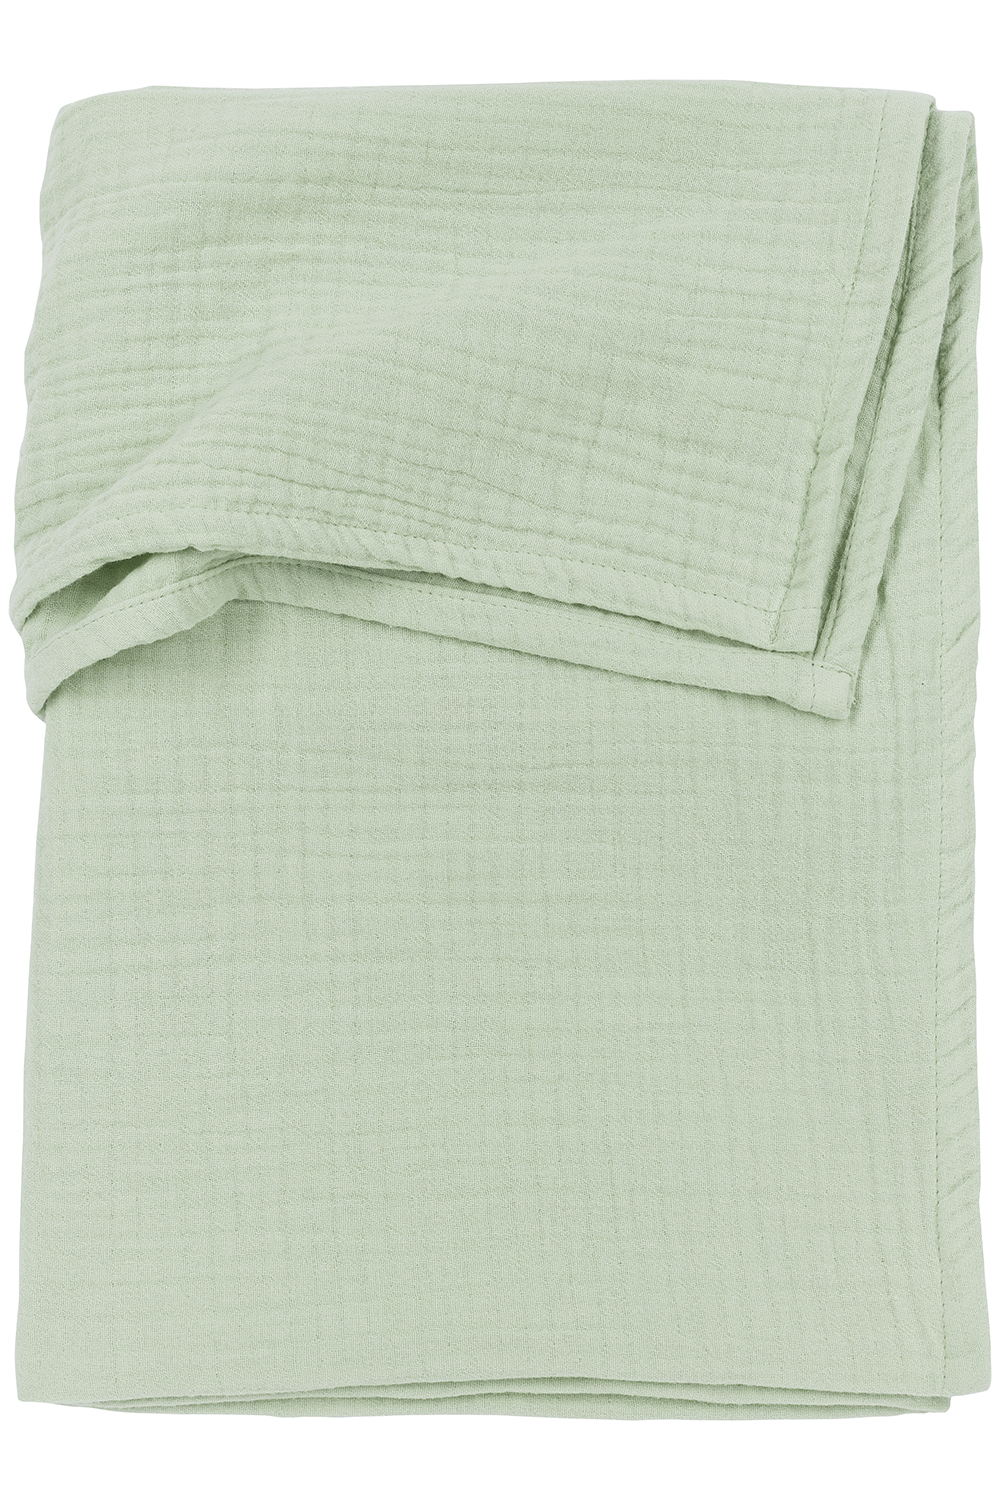 Cot bed sheet muslin Uni - soft green - 100x150cm